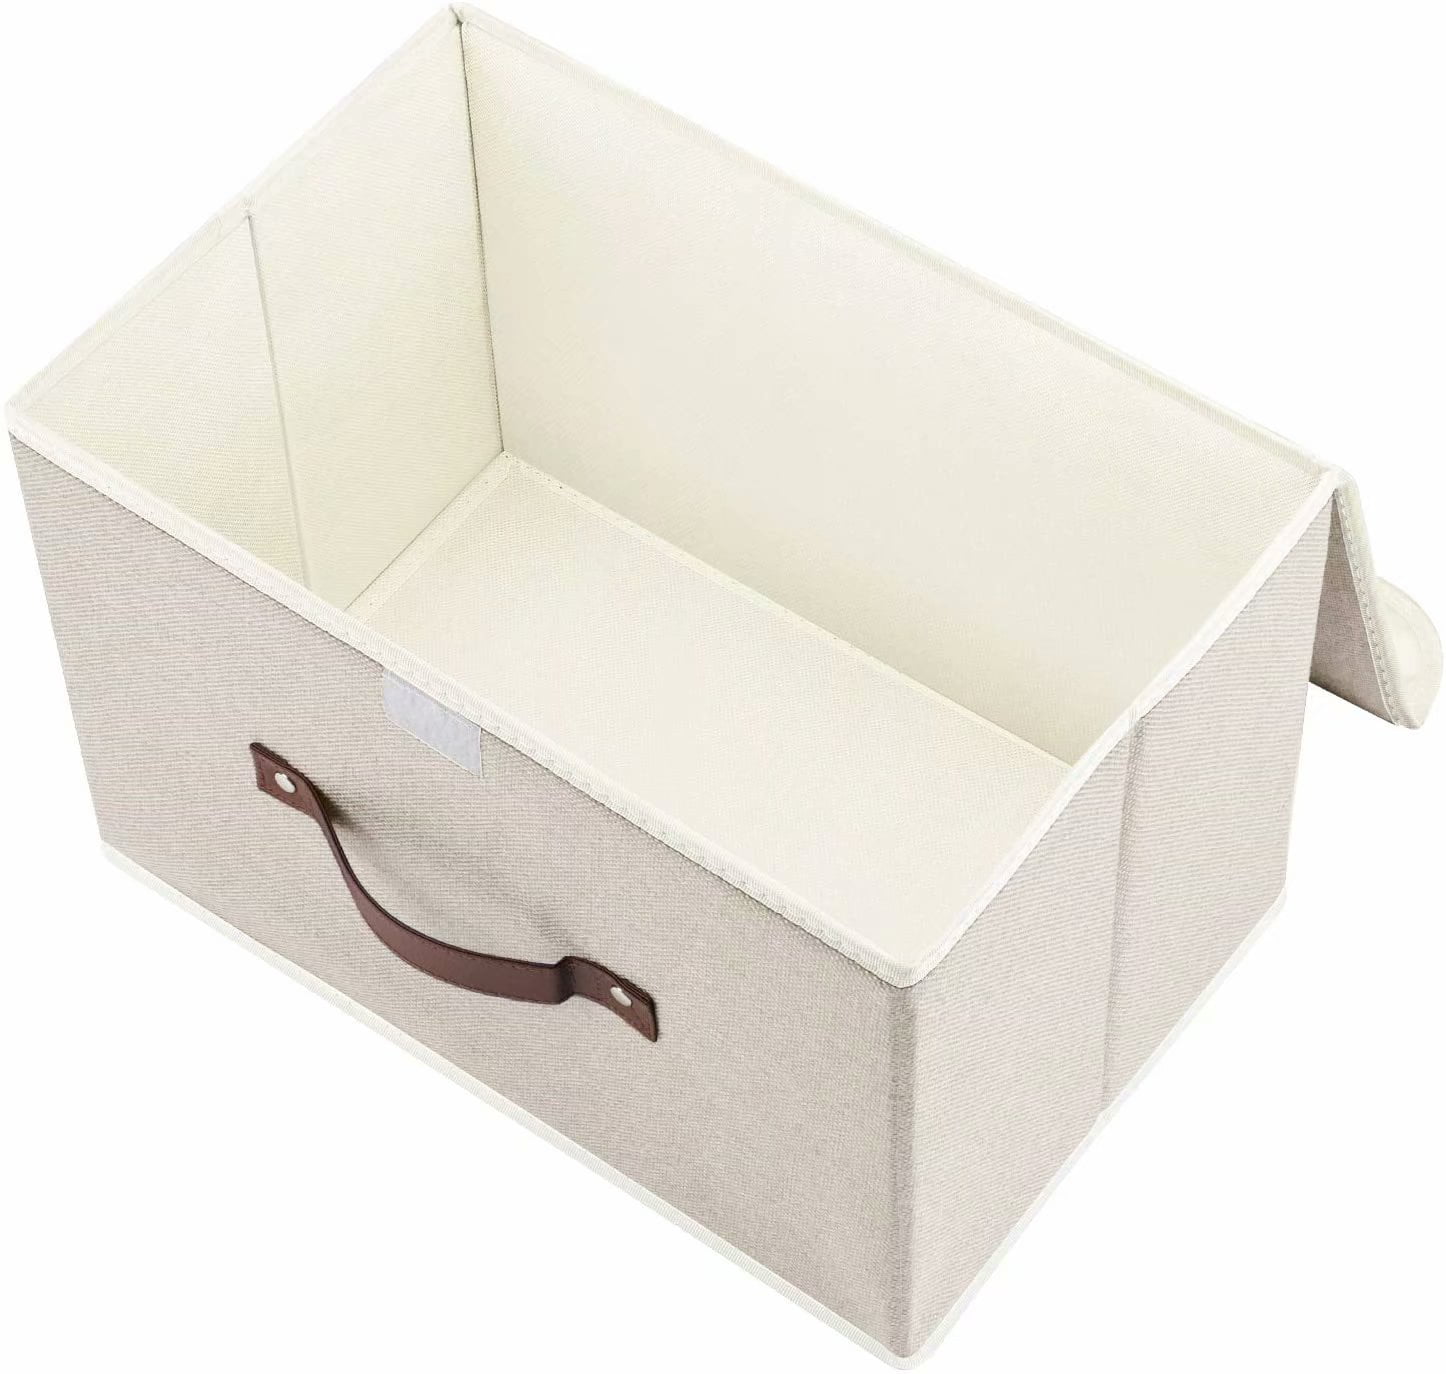 Liuzhou 2 Pcs Felt Storage Baskets Foldable Storage Box Collapsible Cube Bin with Metal Handle Toy Book Organizer Nursery Hamper Gray, 13.8*9.4*8.3inches/35*24*21cm 